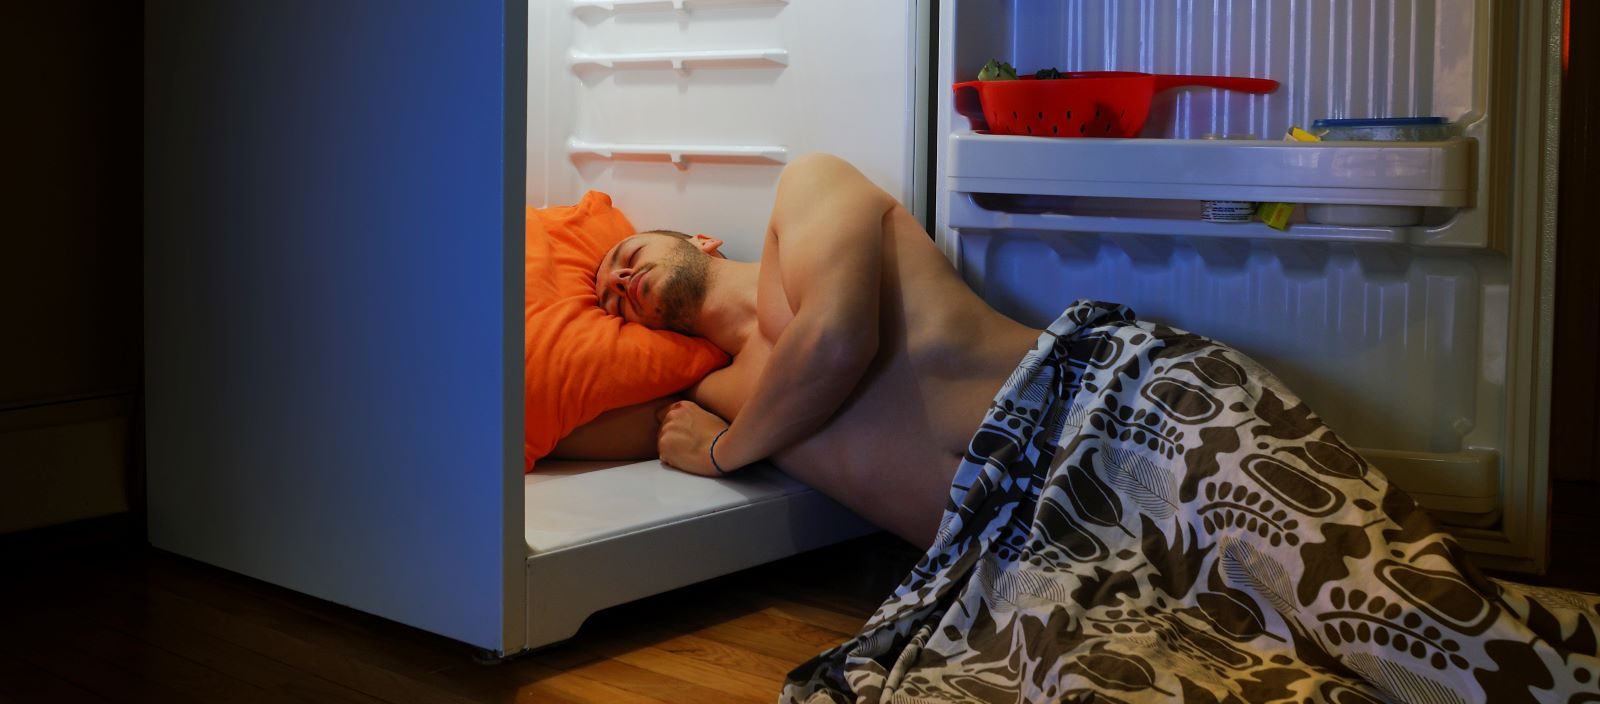 A man sleeps in the fridge to preserve sleep quality.